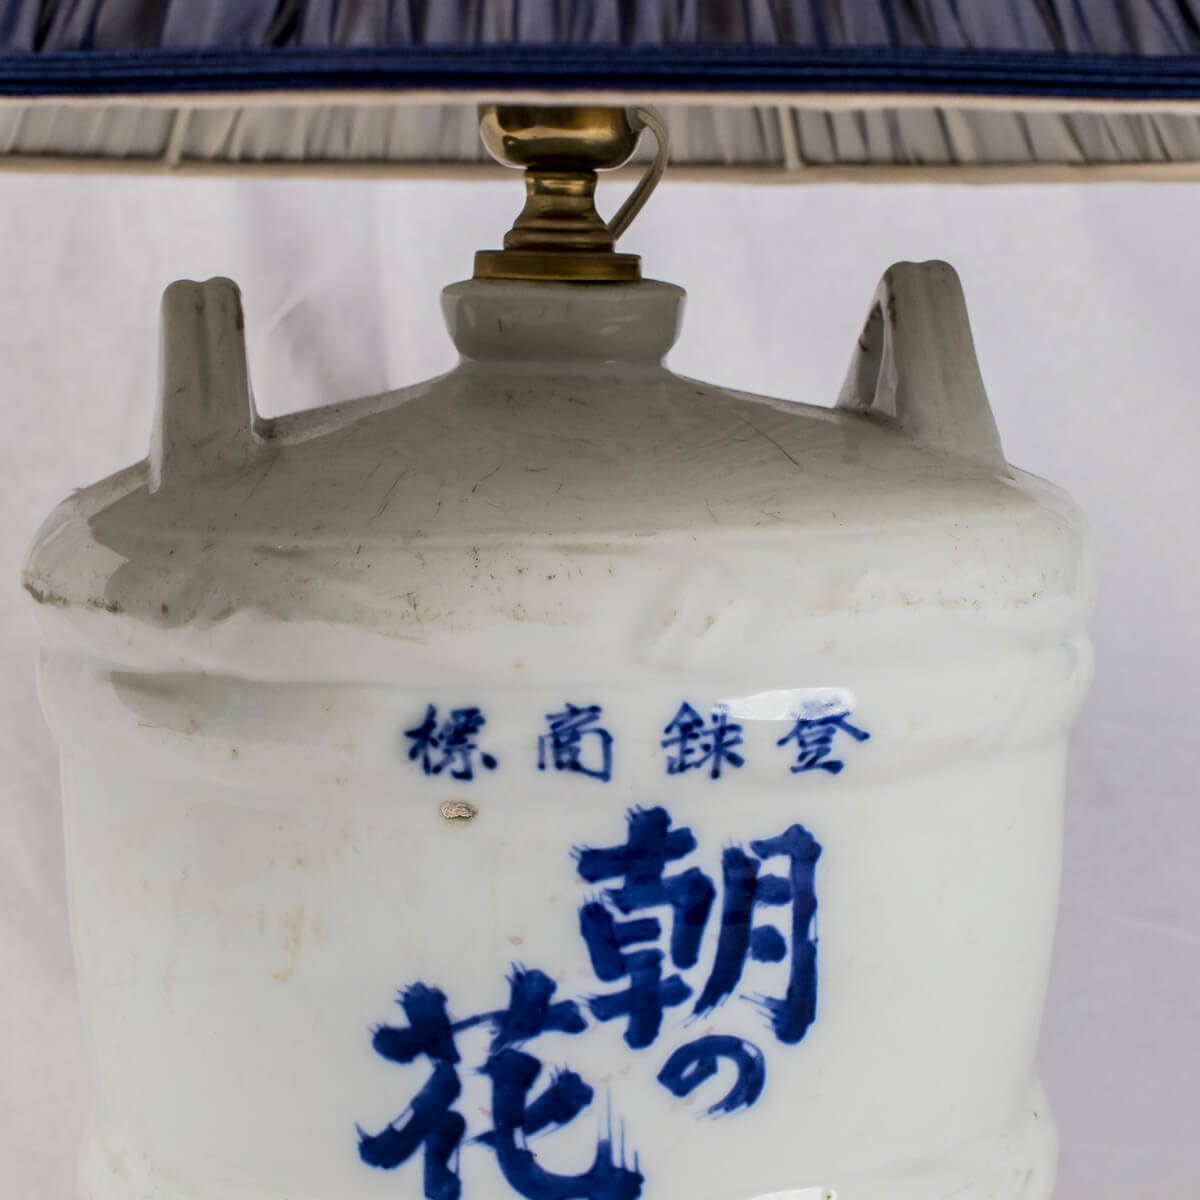 Bottle sakè giapponese con lumi